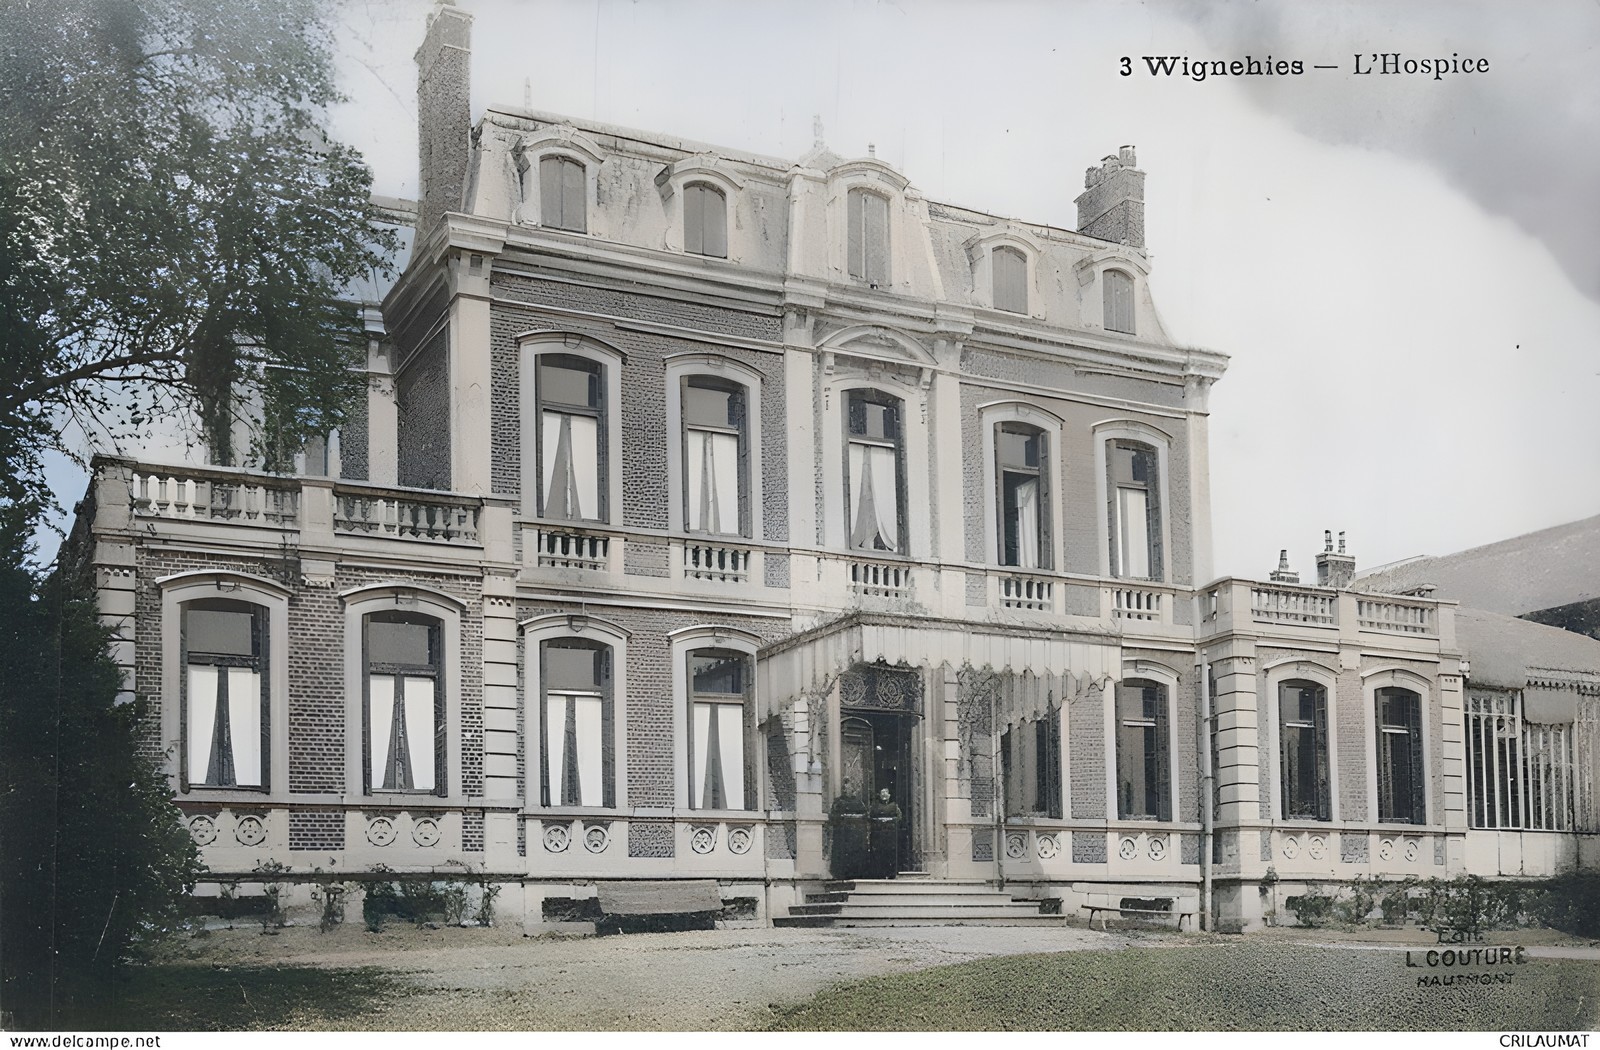 Ancien hospice de Wignehies.